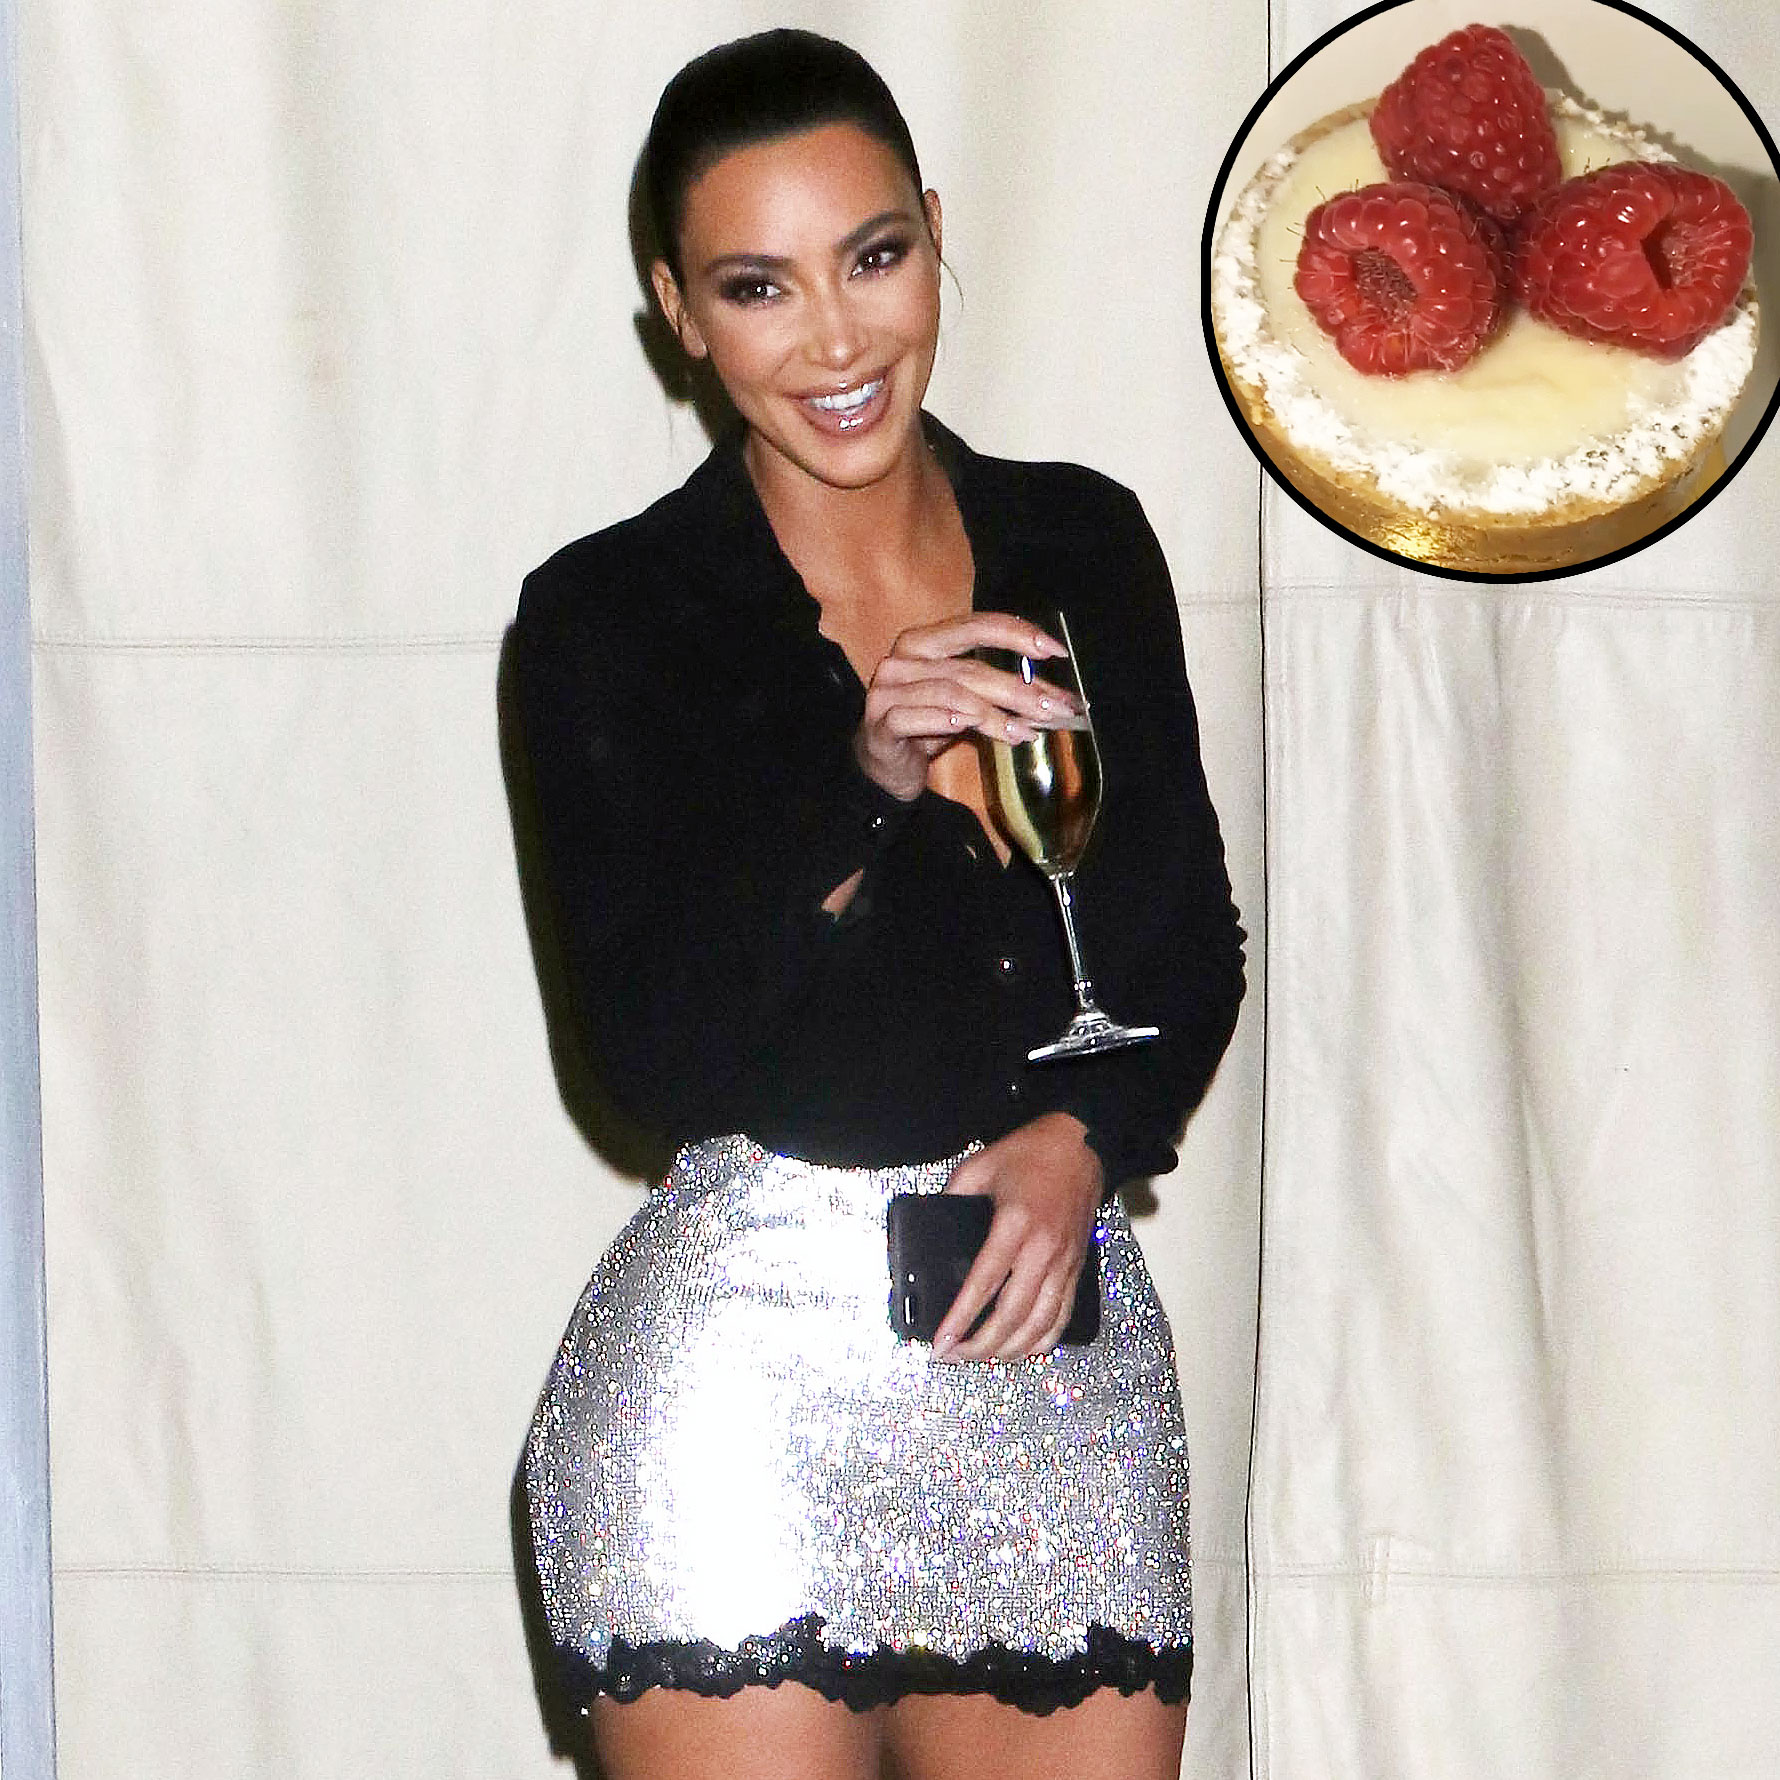 Kim Kardashian Devours Her Favorite Little Cheesecake During Nyc